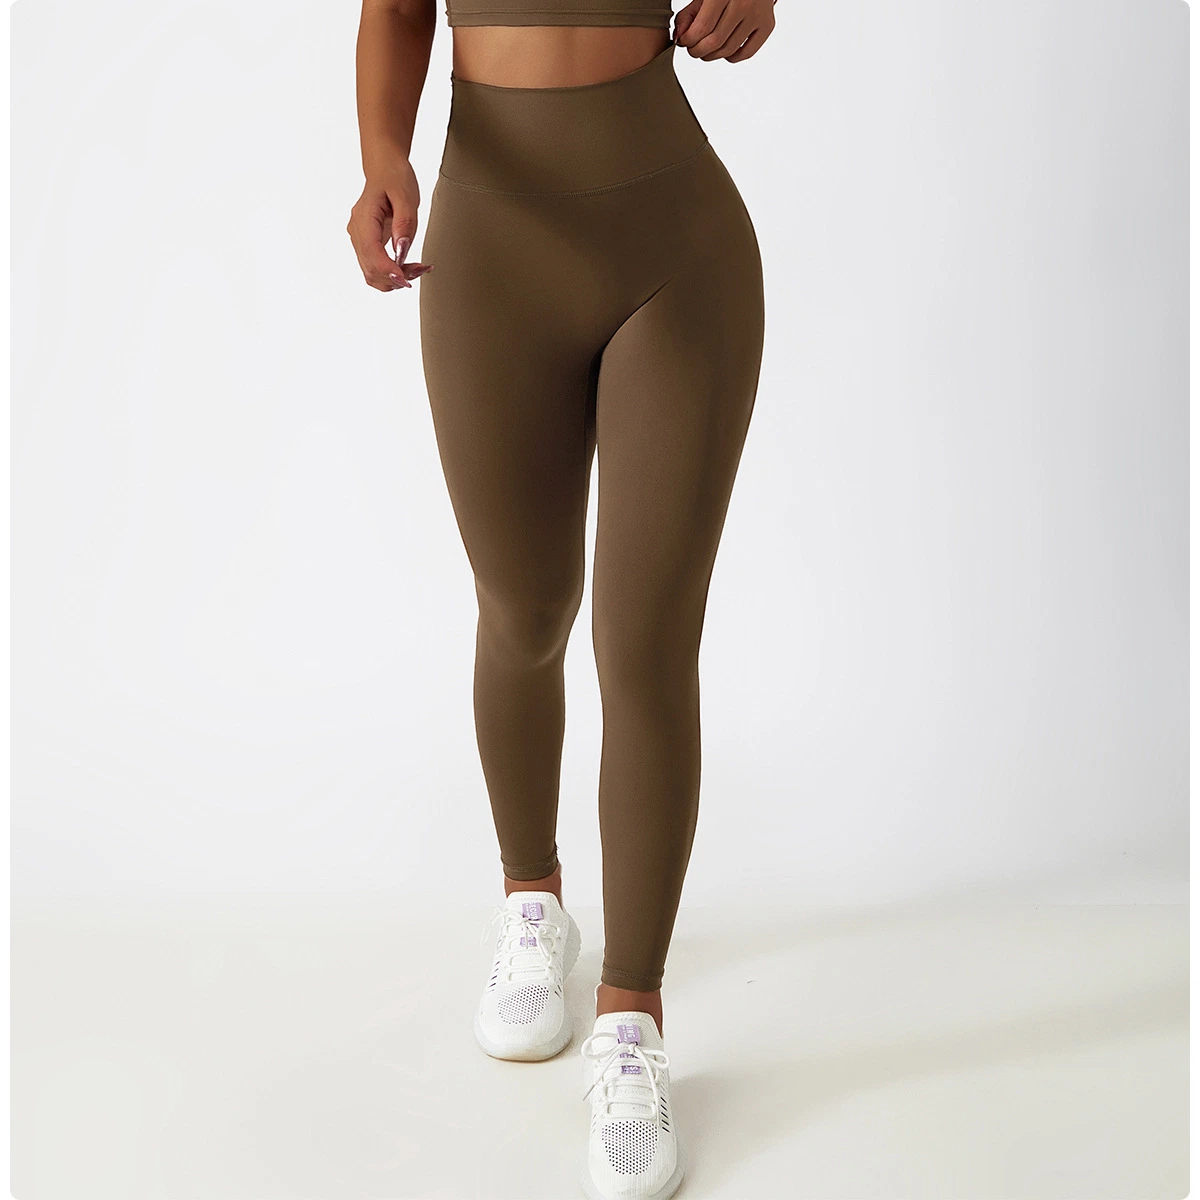 Großhandel/Lieferant solide Farbe sofort lieferbar Mädchen Yoga Hosen Fitness Leggings